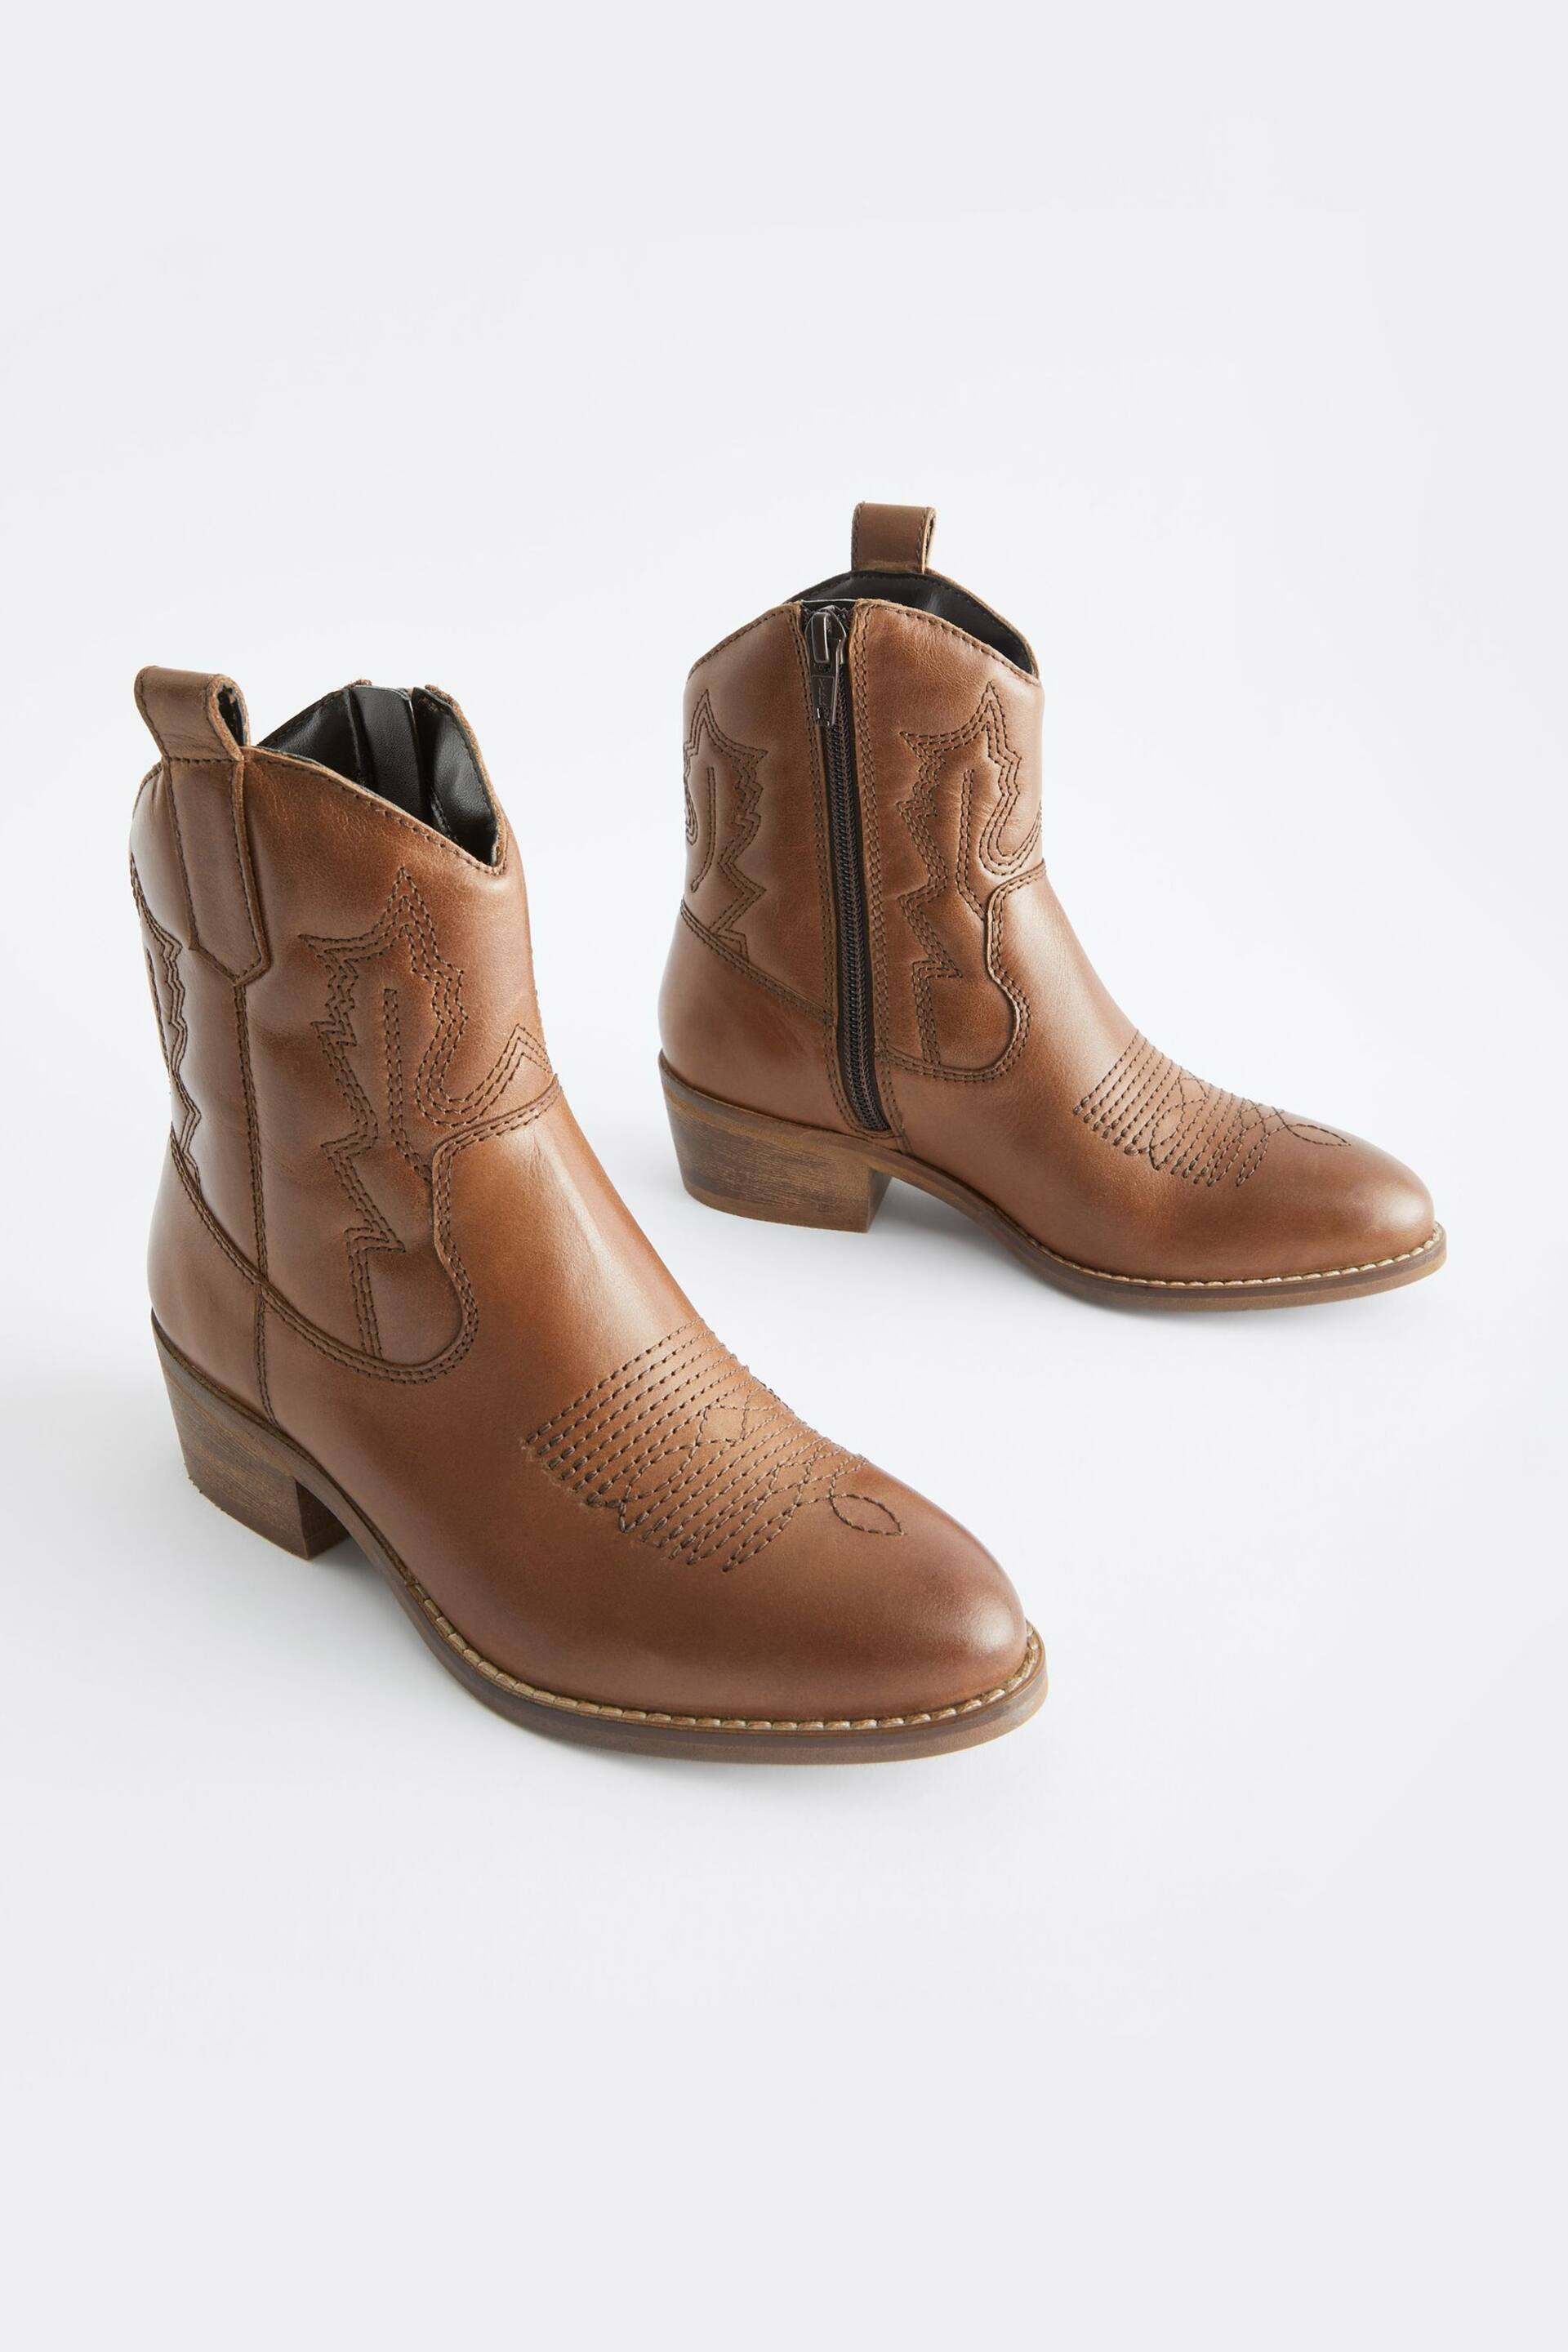 Tan Brown Western Heel Boots - Image 1 of 5